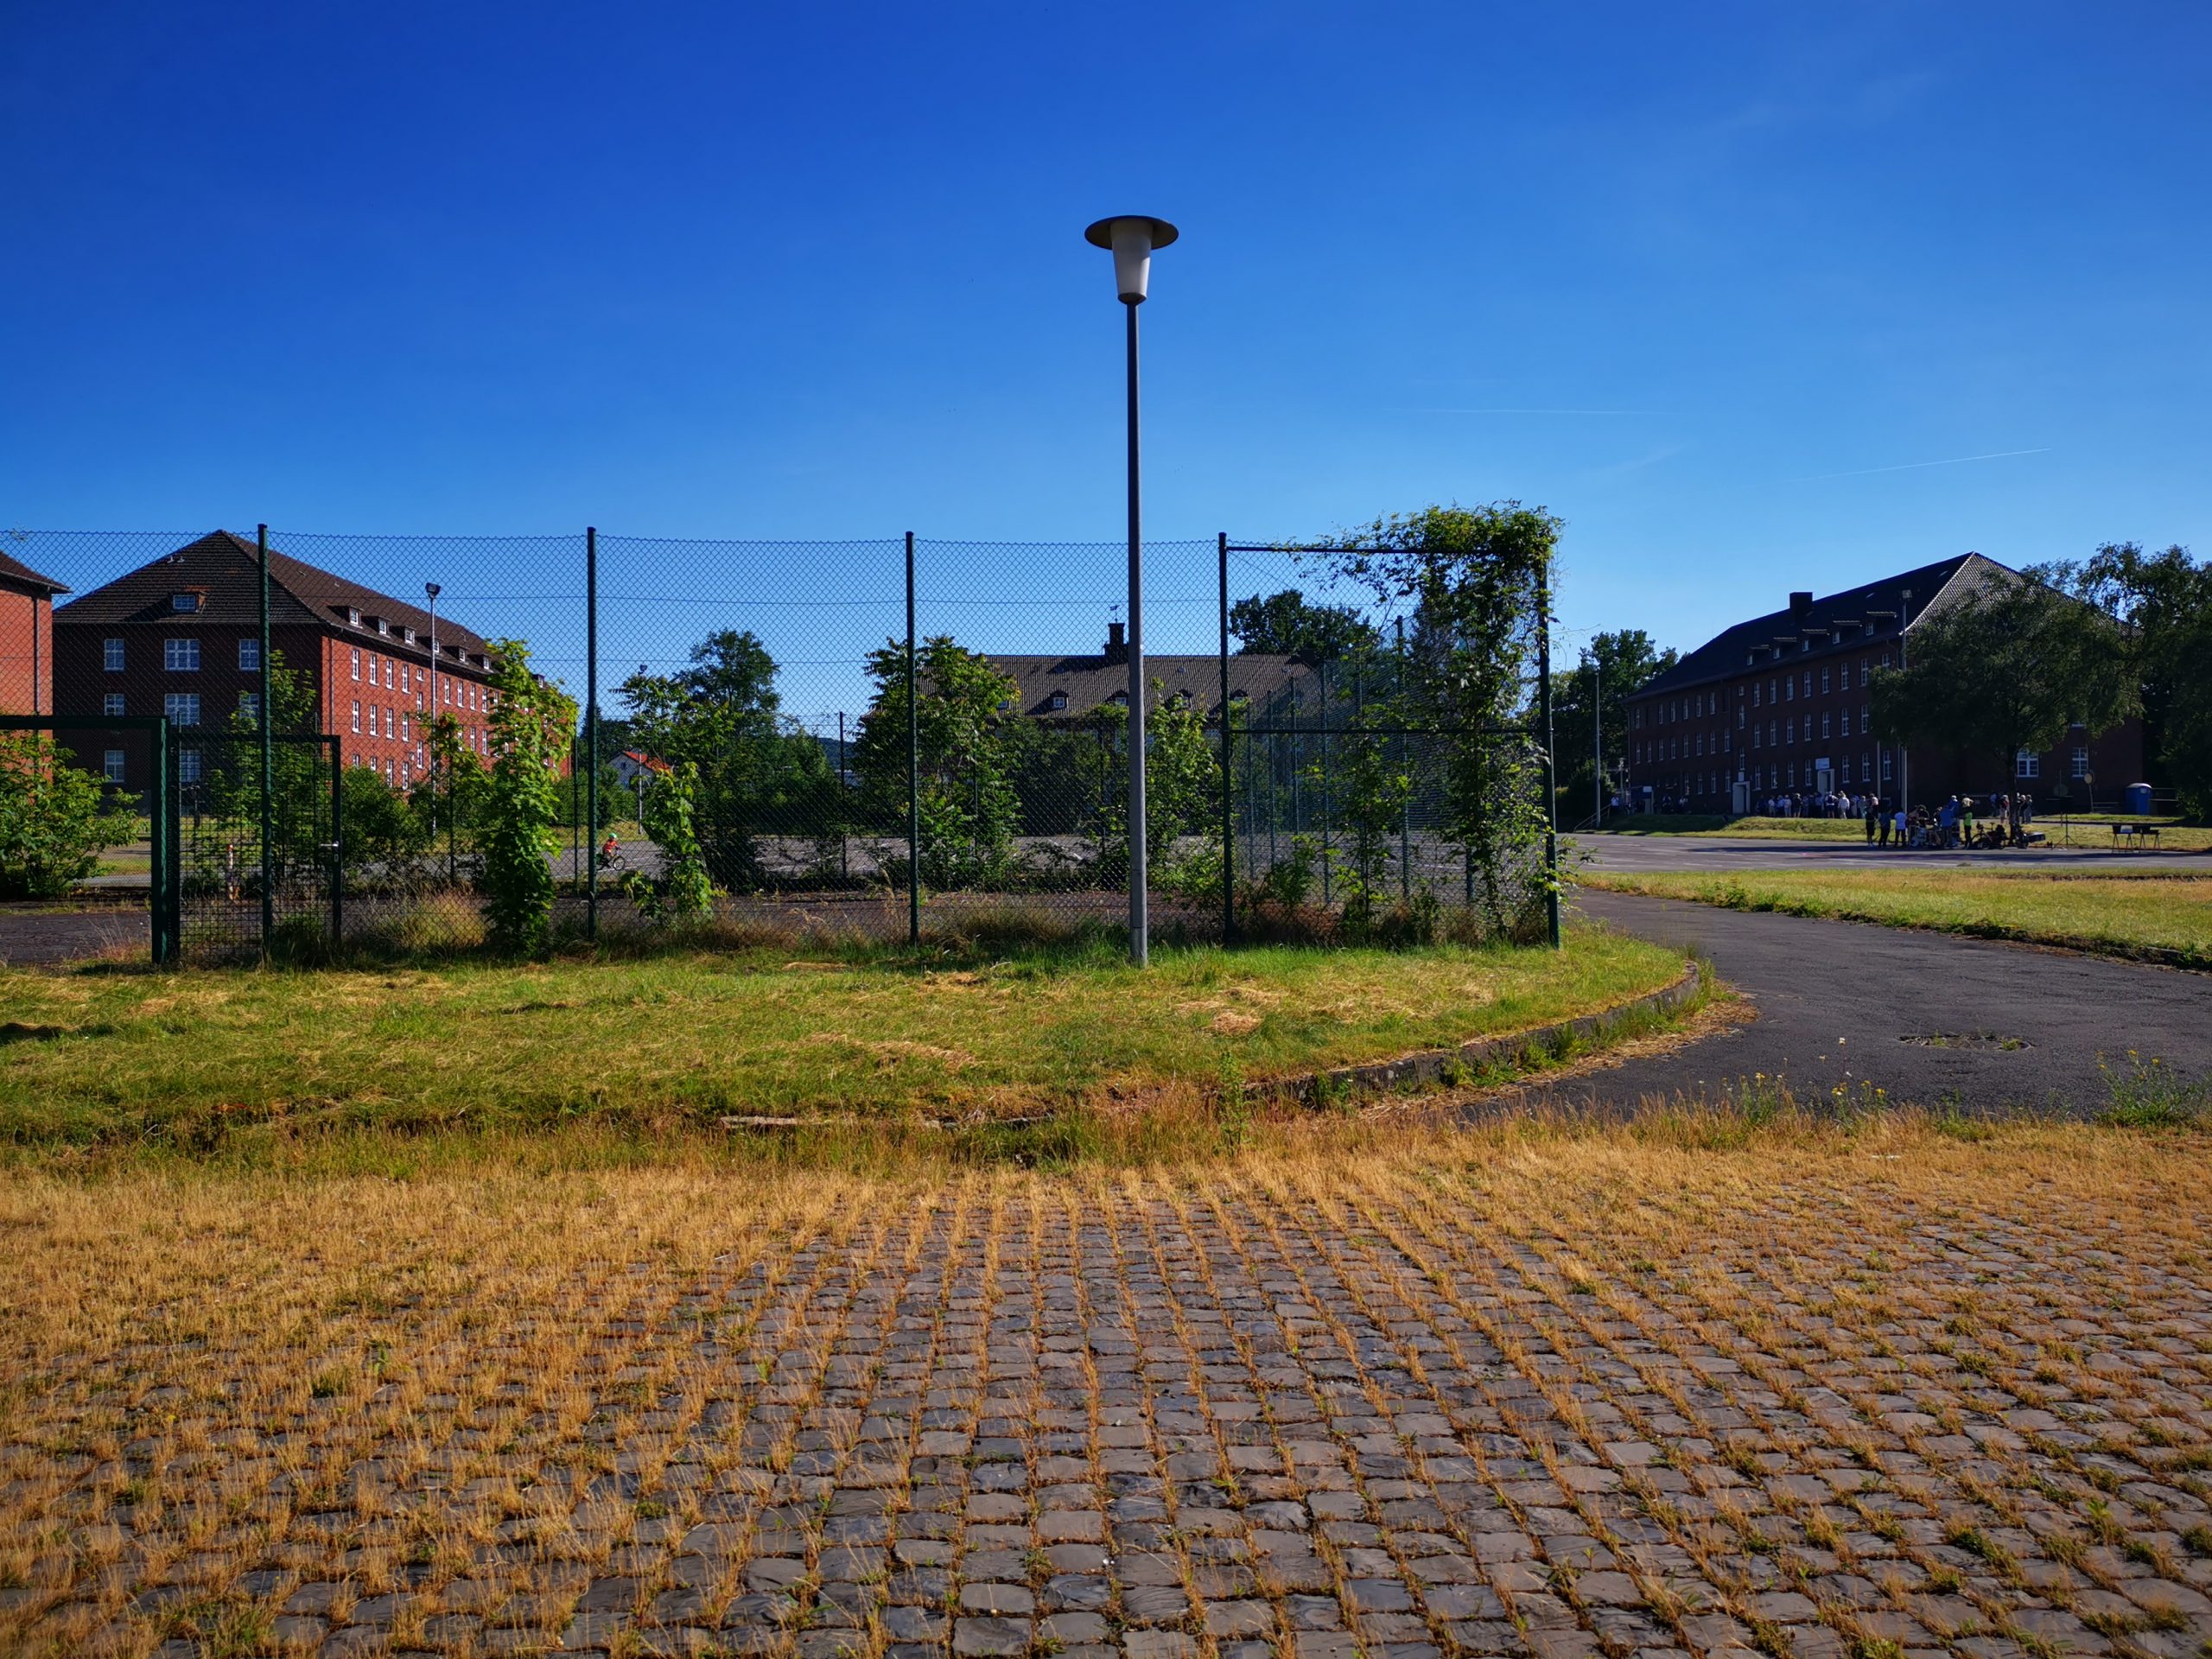 Transurban_ sportsground and parking lot of barracks